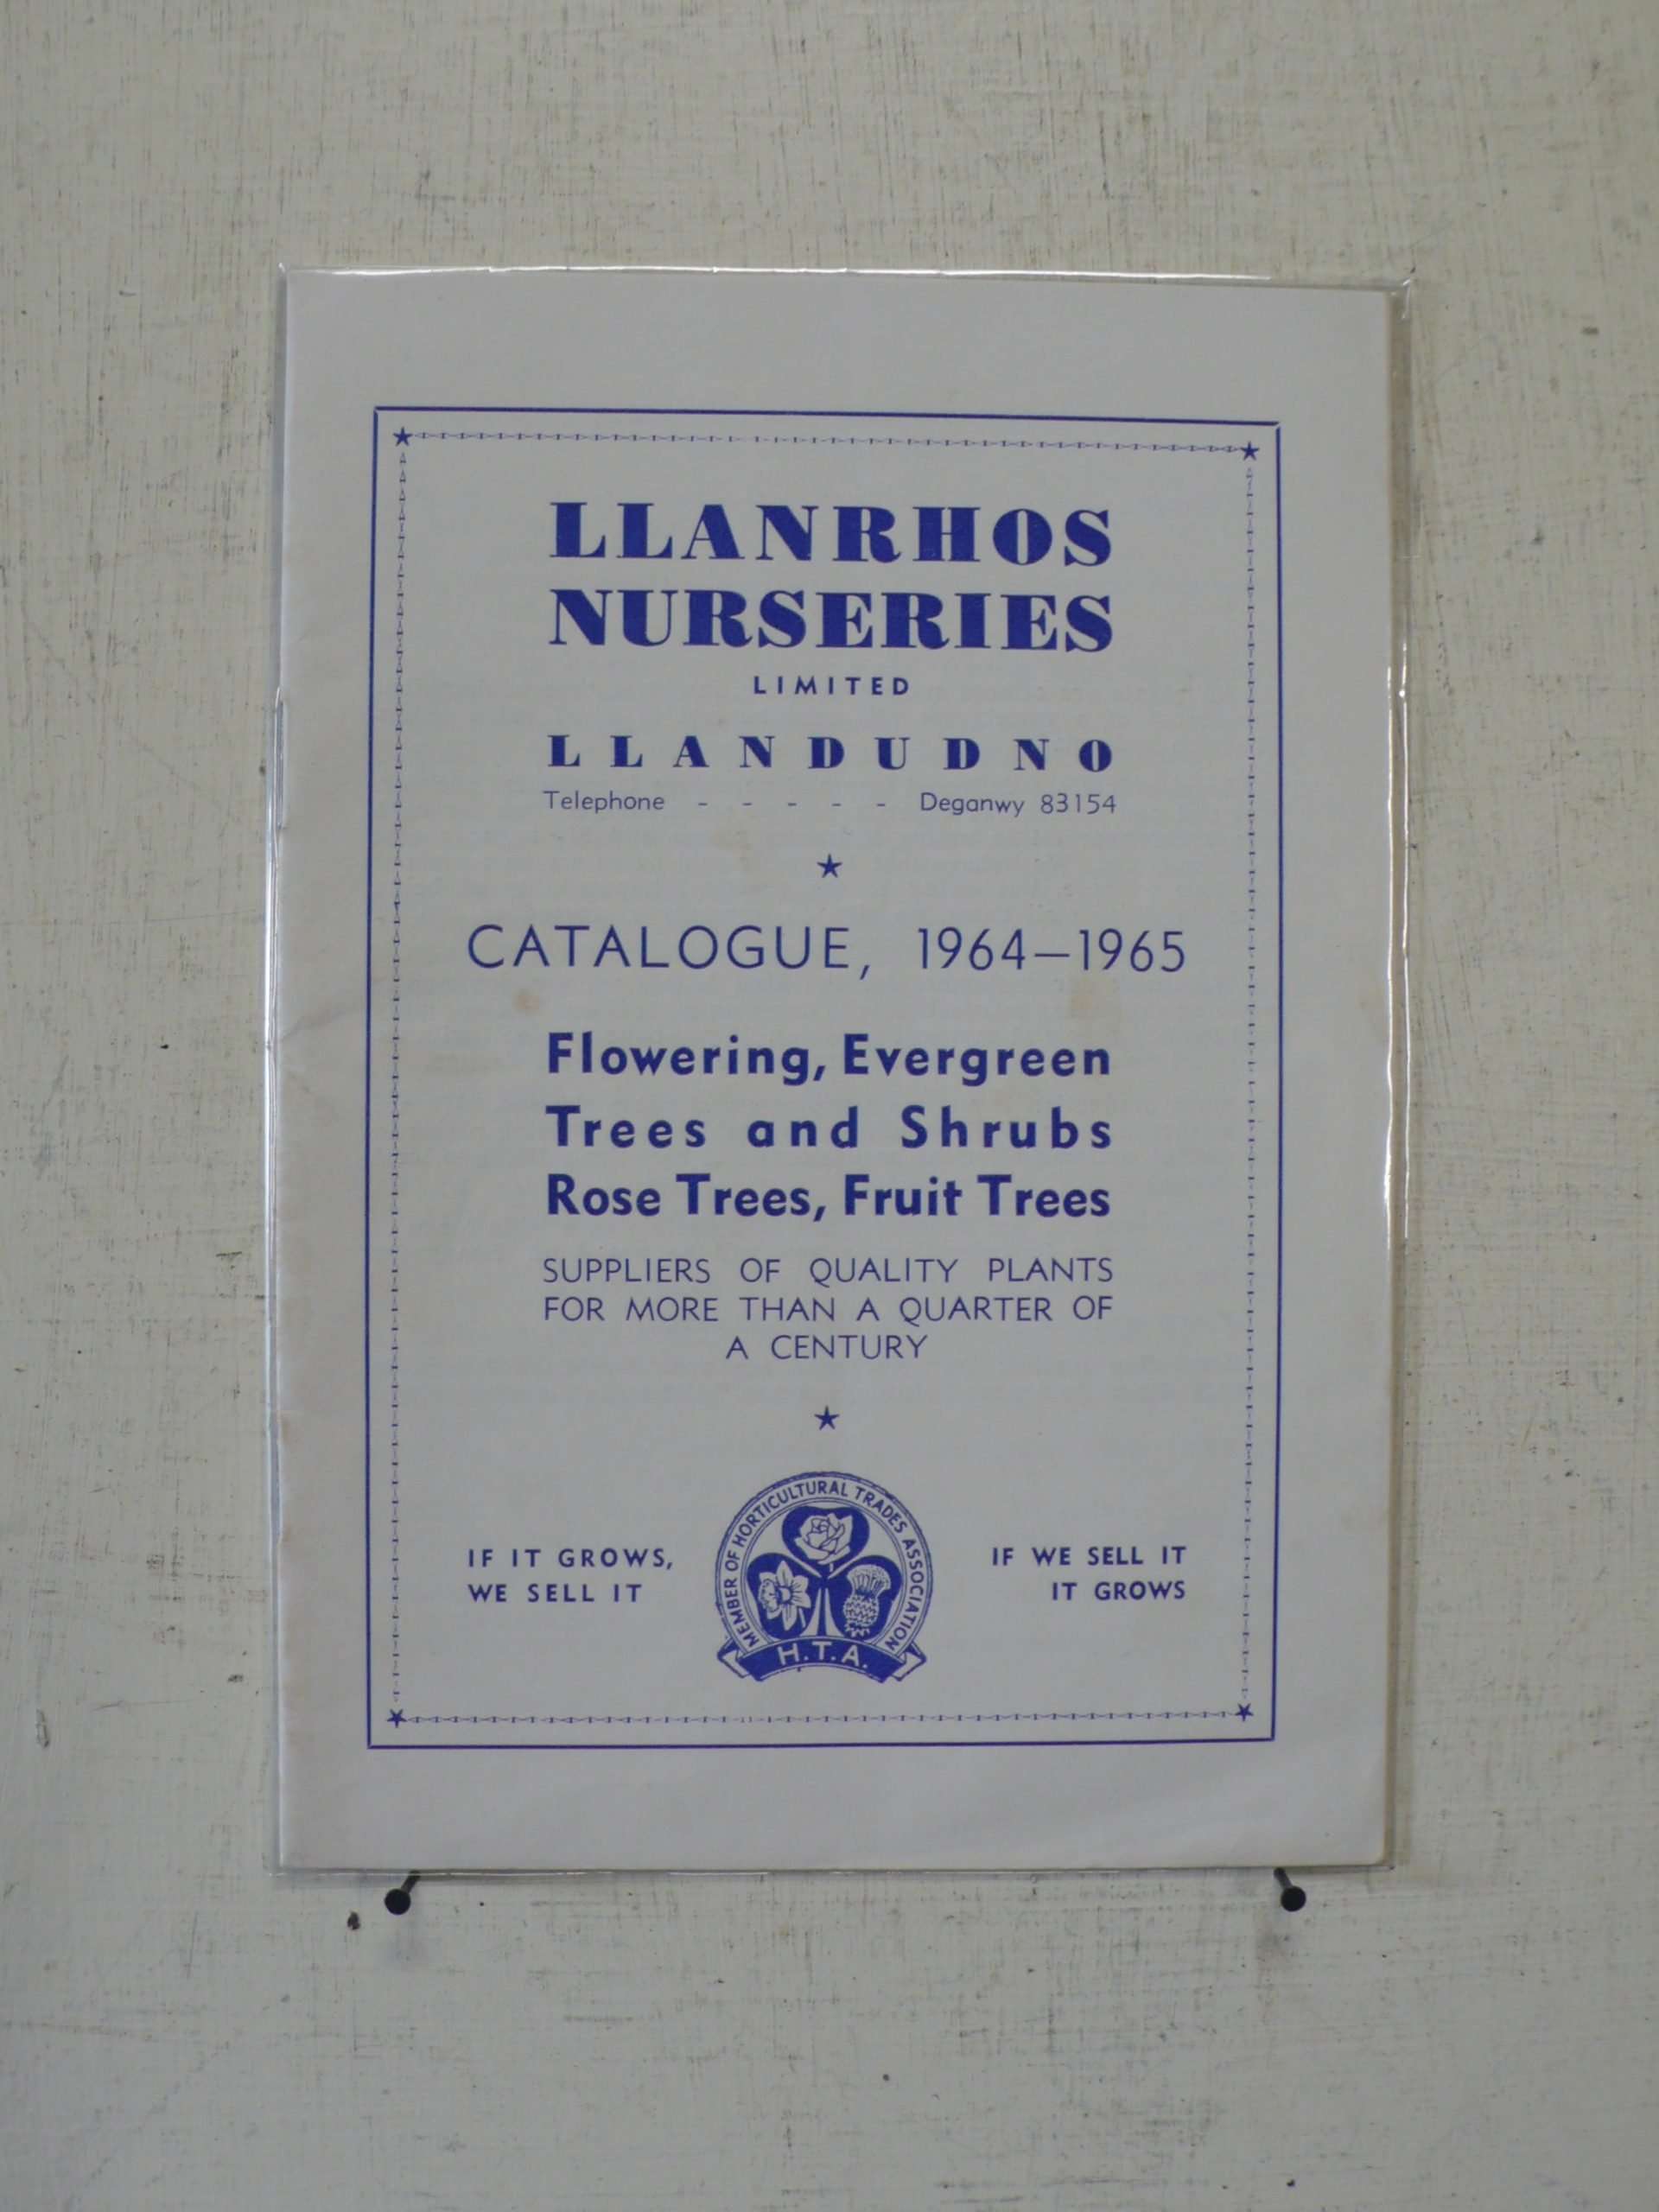 Llanrhos Nurseries Trees and Shrubs Catalogue, 1964-65